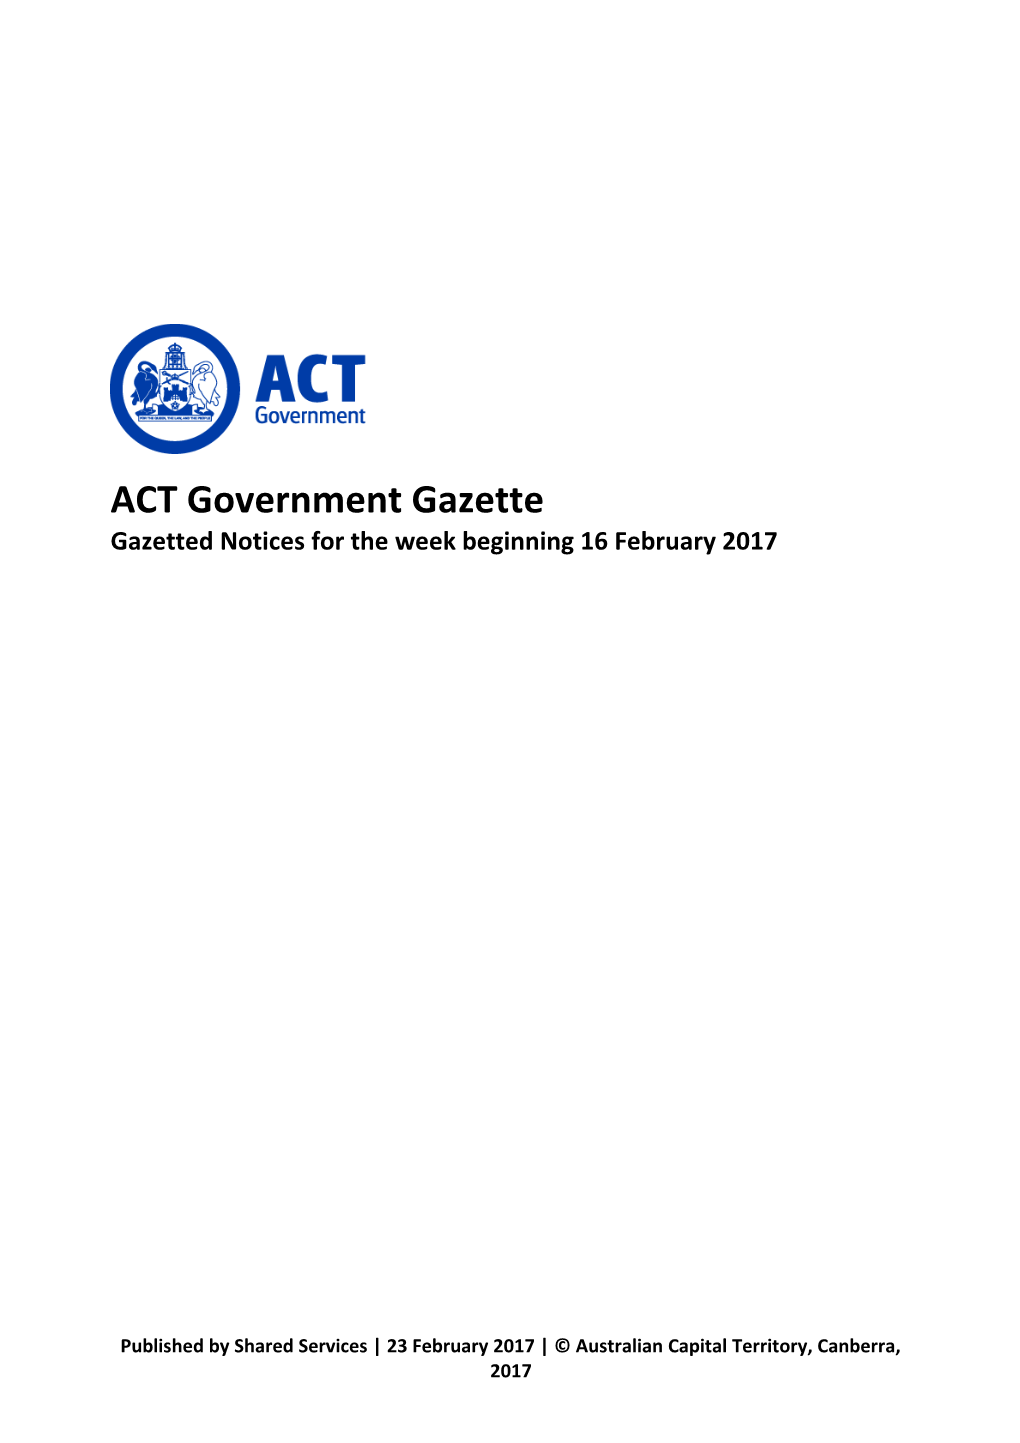 ACT Government Gazette 23 Feb 2017